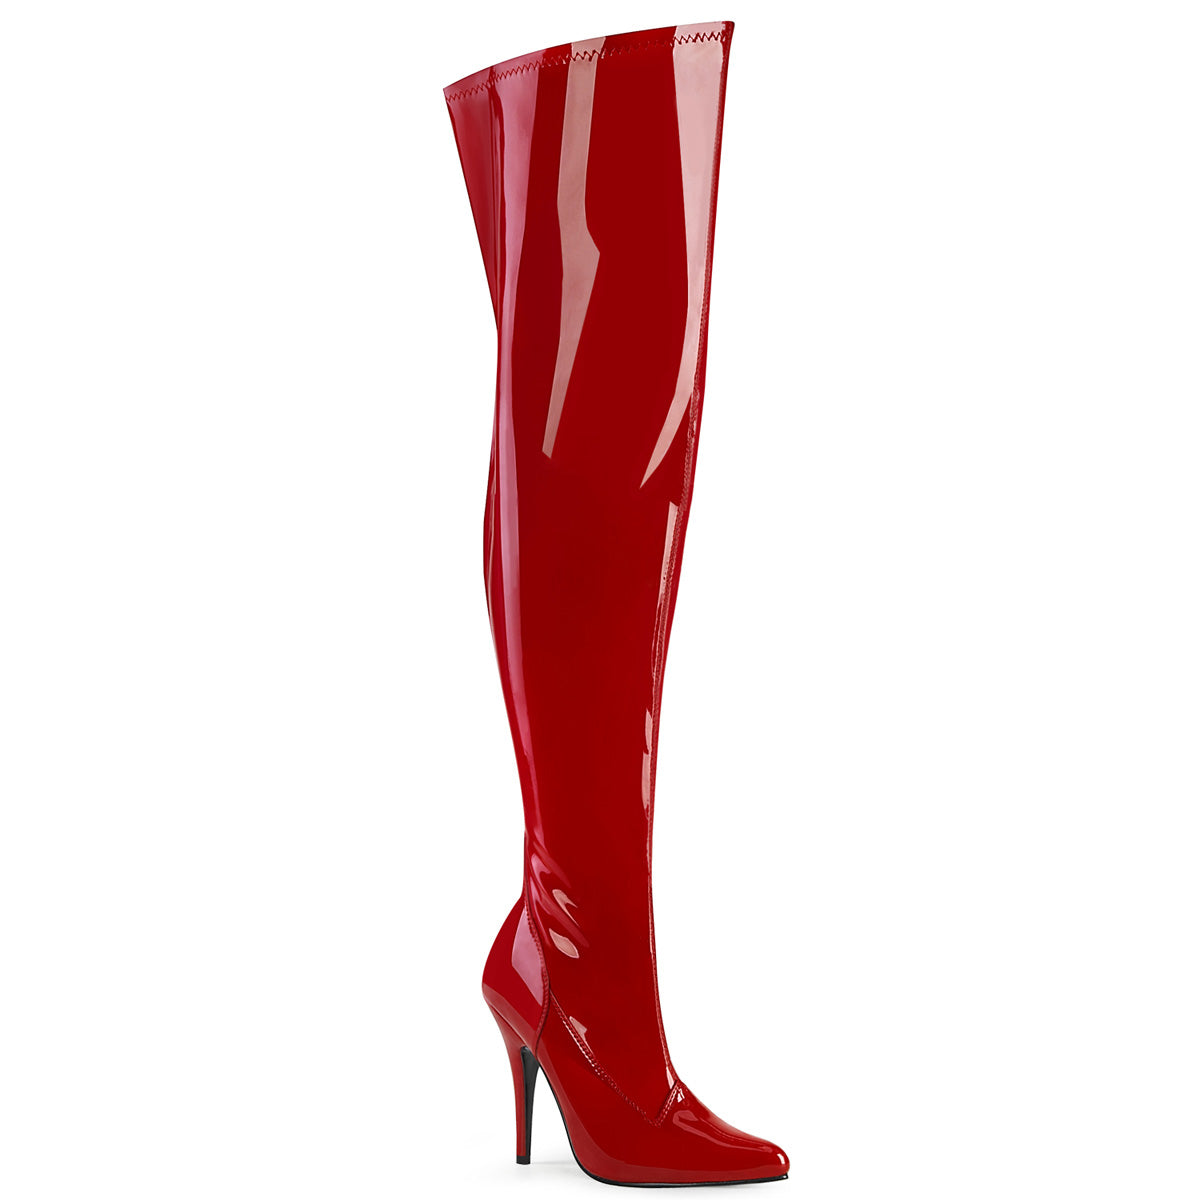 Pleaser Pink Label Womens Boots. SEDUCE-3000wc Red Str. Klopfen